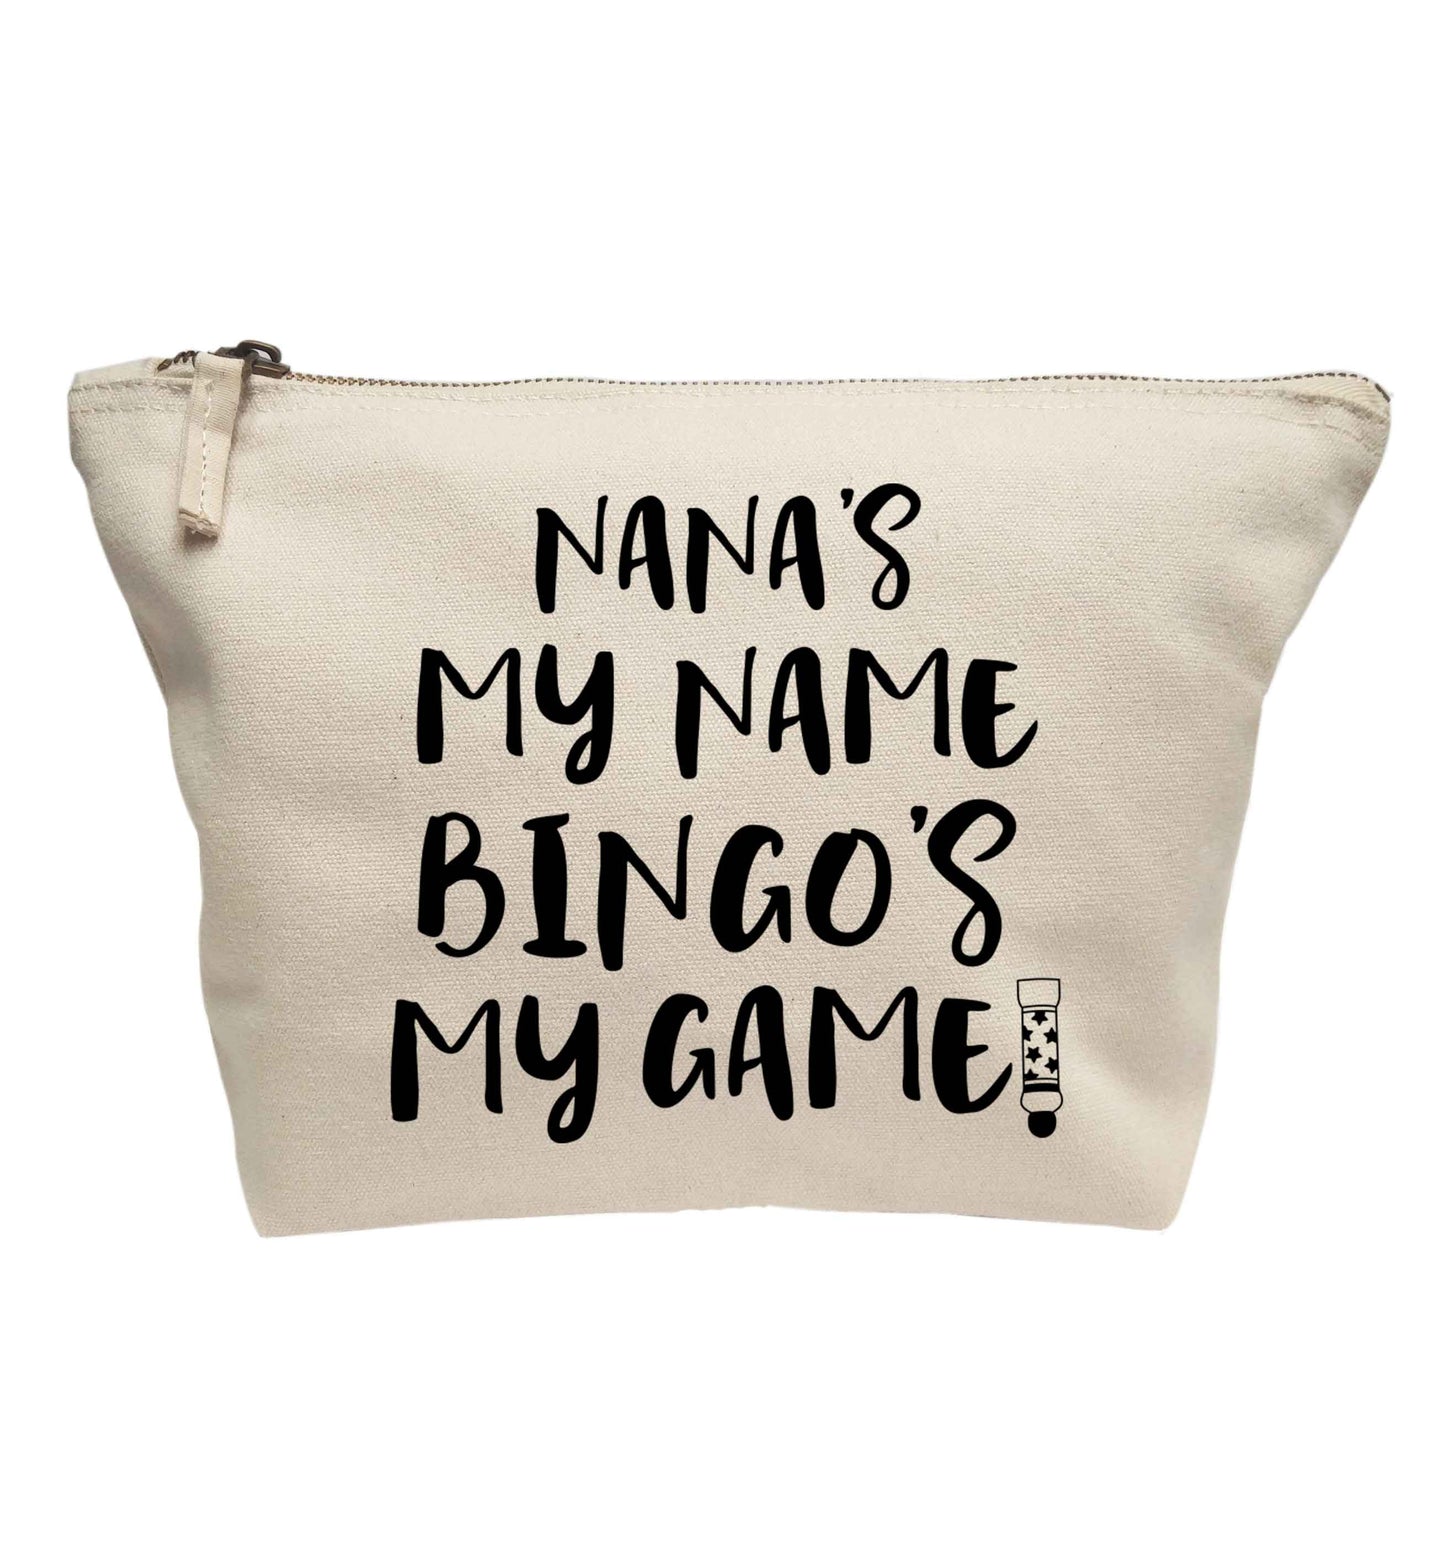 Nana's my name bingo's my game! | makeup / wash bag